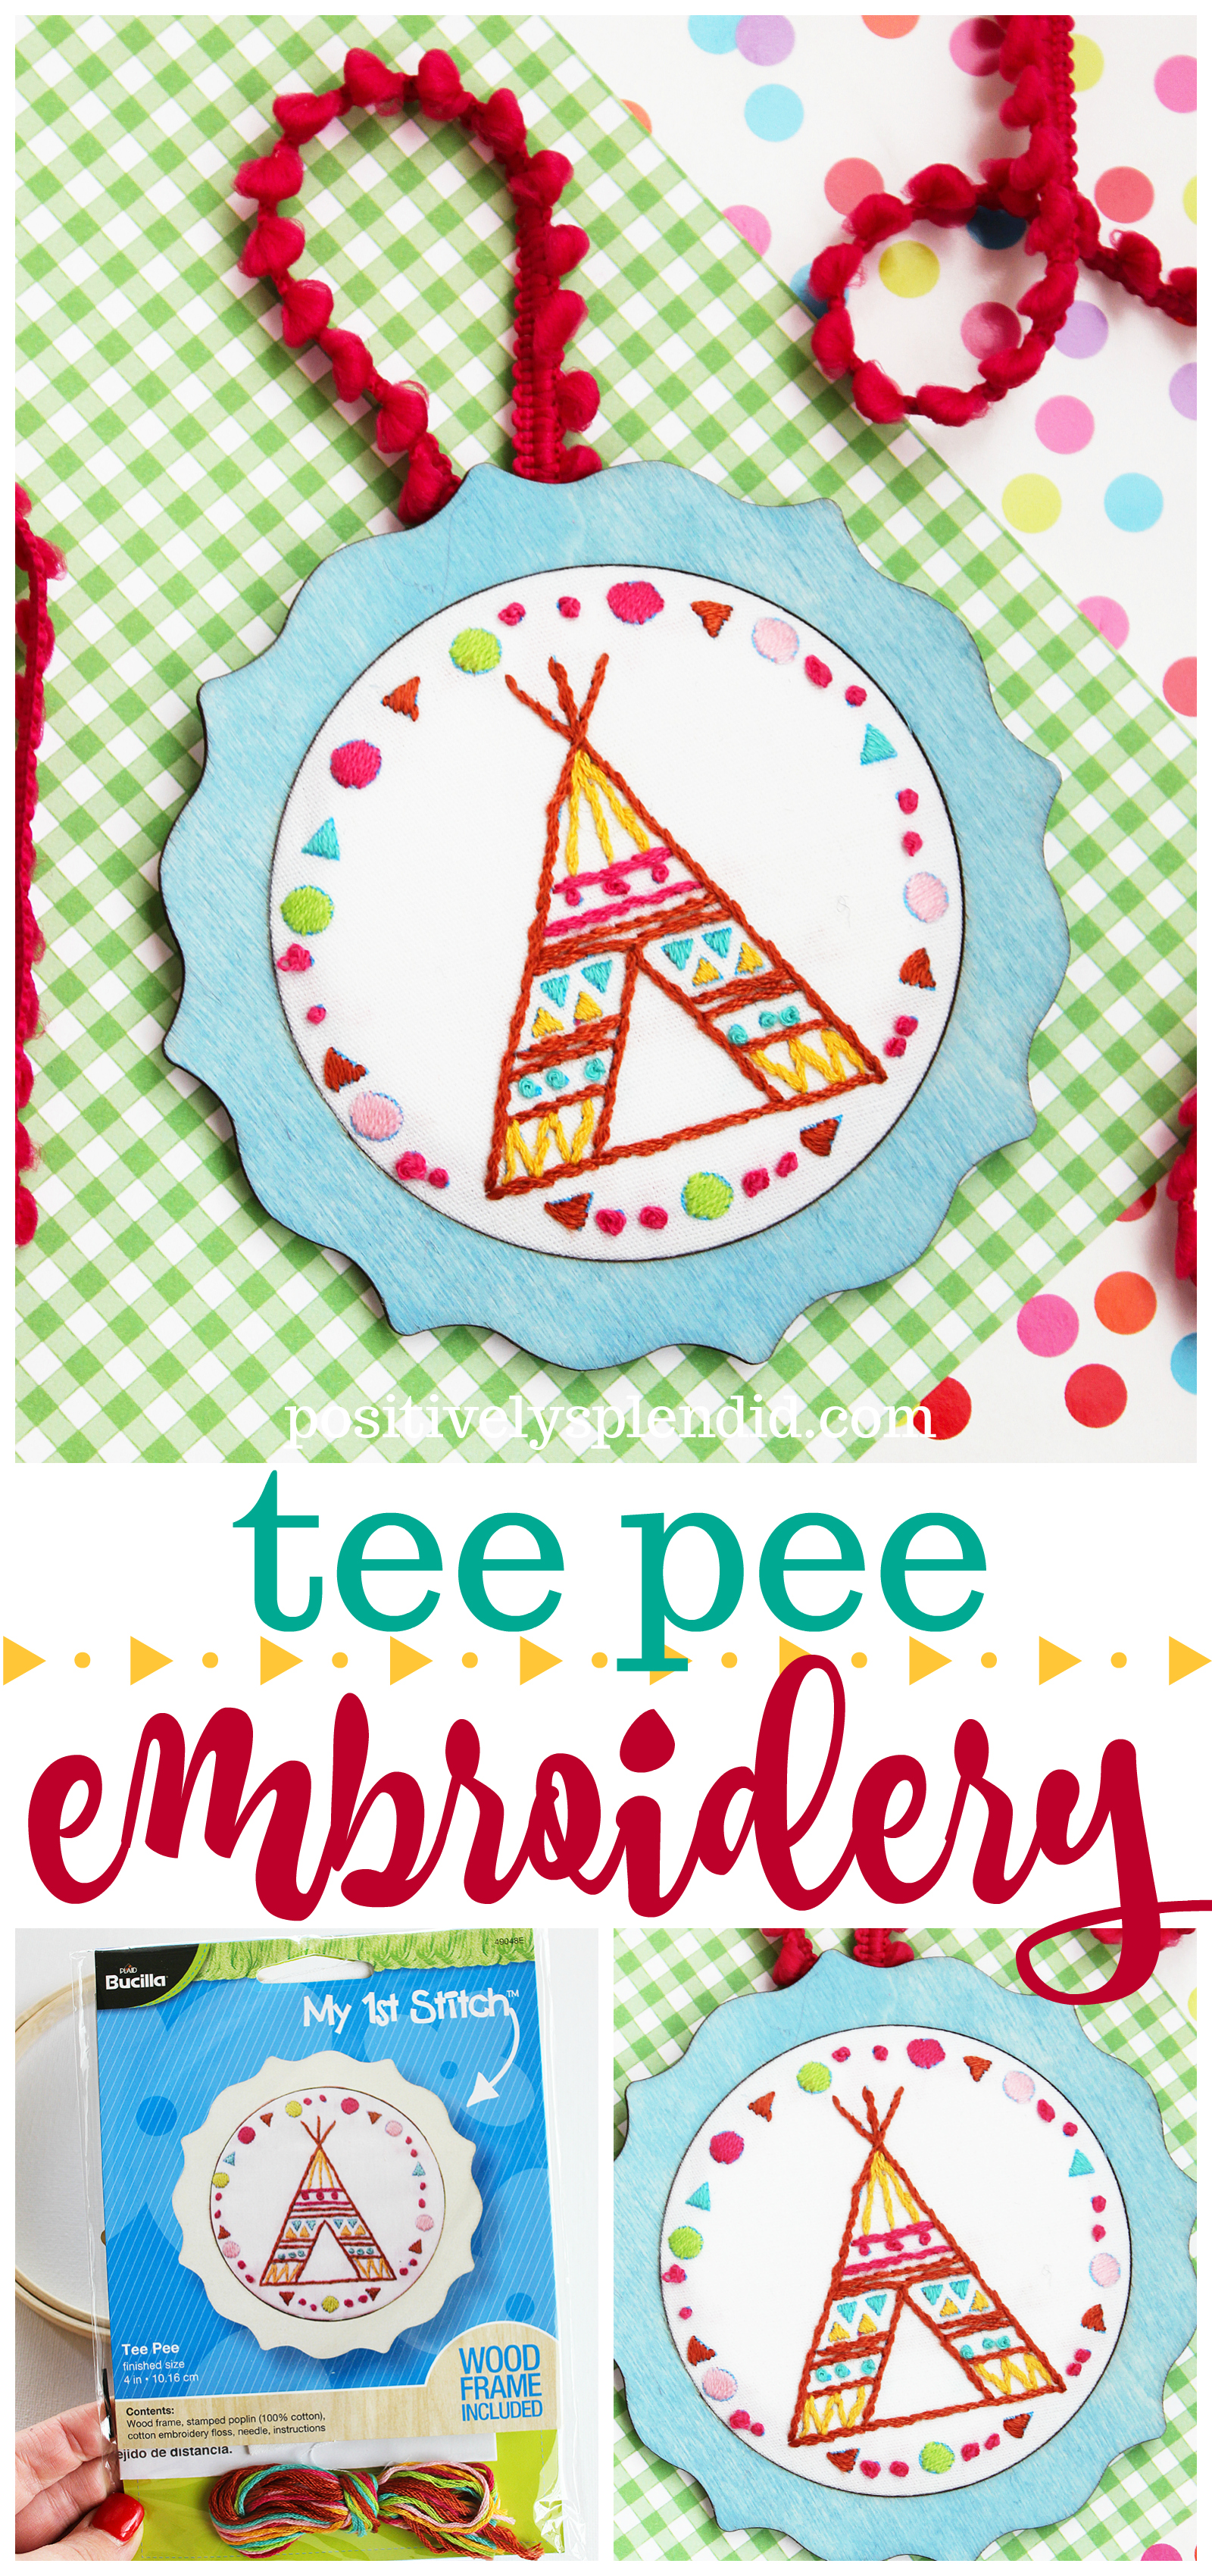 Tee Pee Embroidery Design